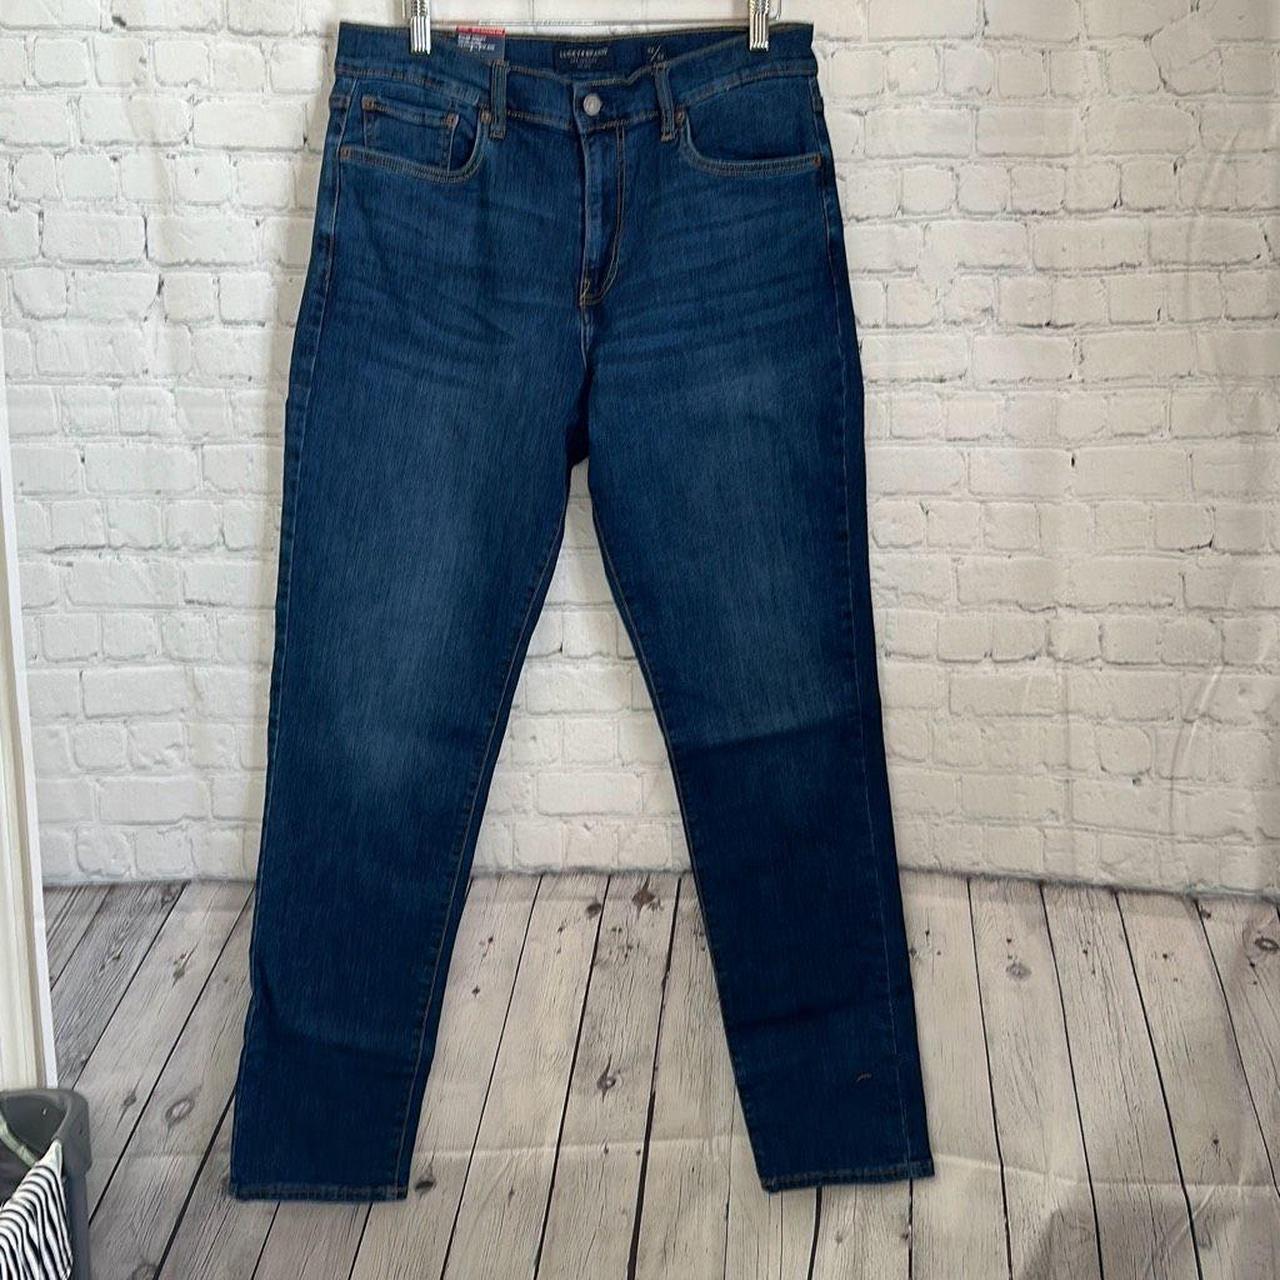 Lucky Brand Men's Jeans 412 Athletic Slim 2 Way - Depop